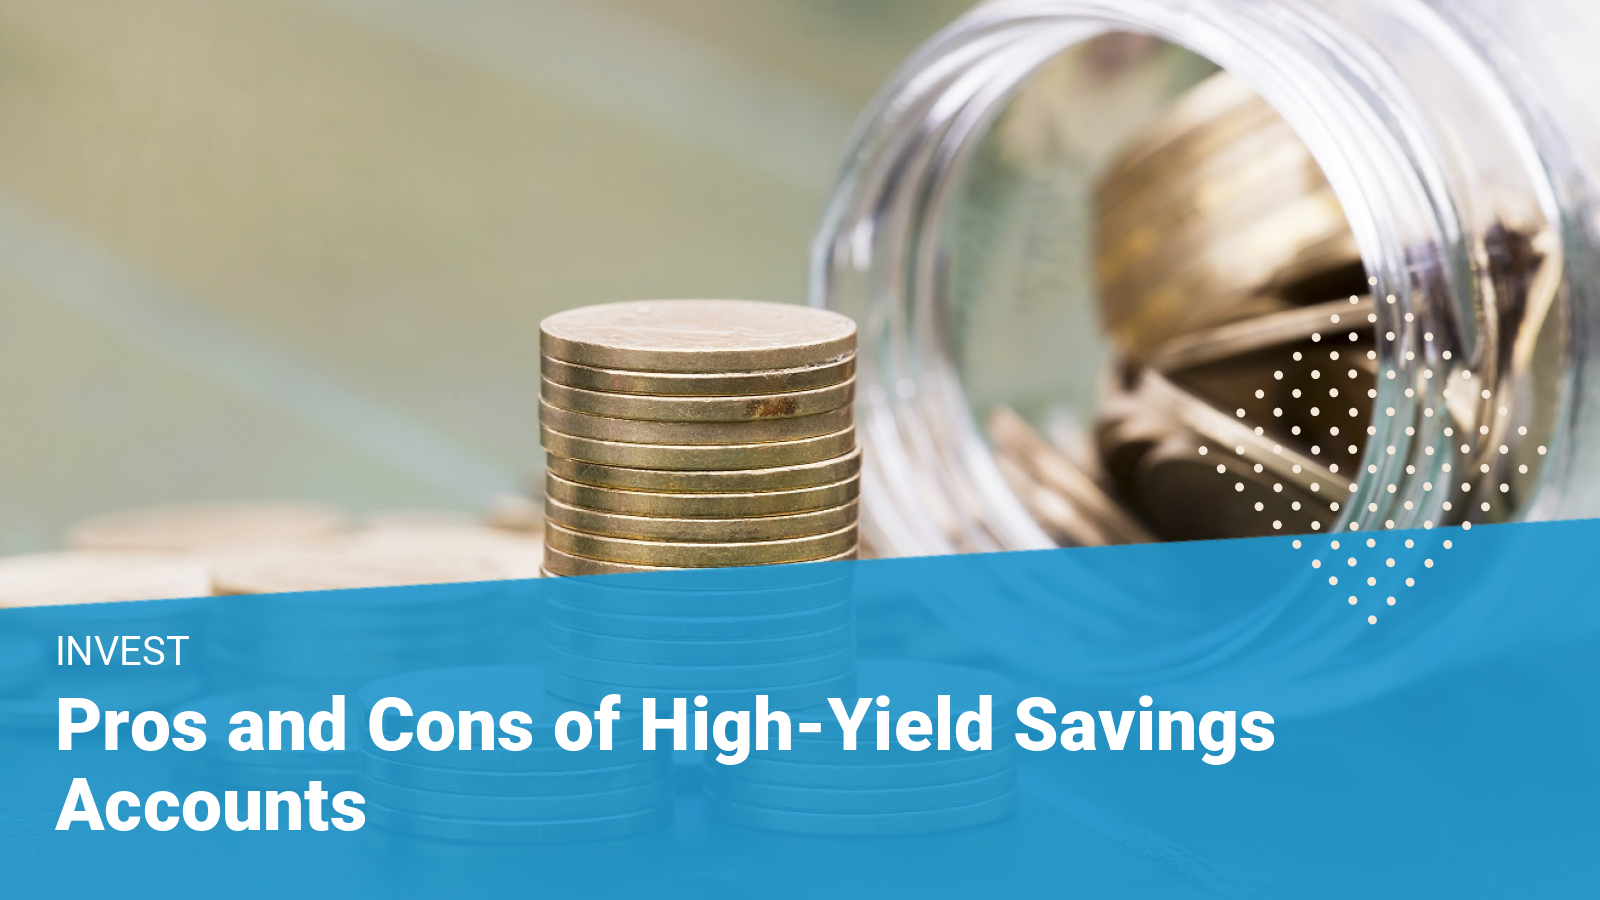 High-Yield Savings Accounts Benefits